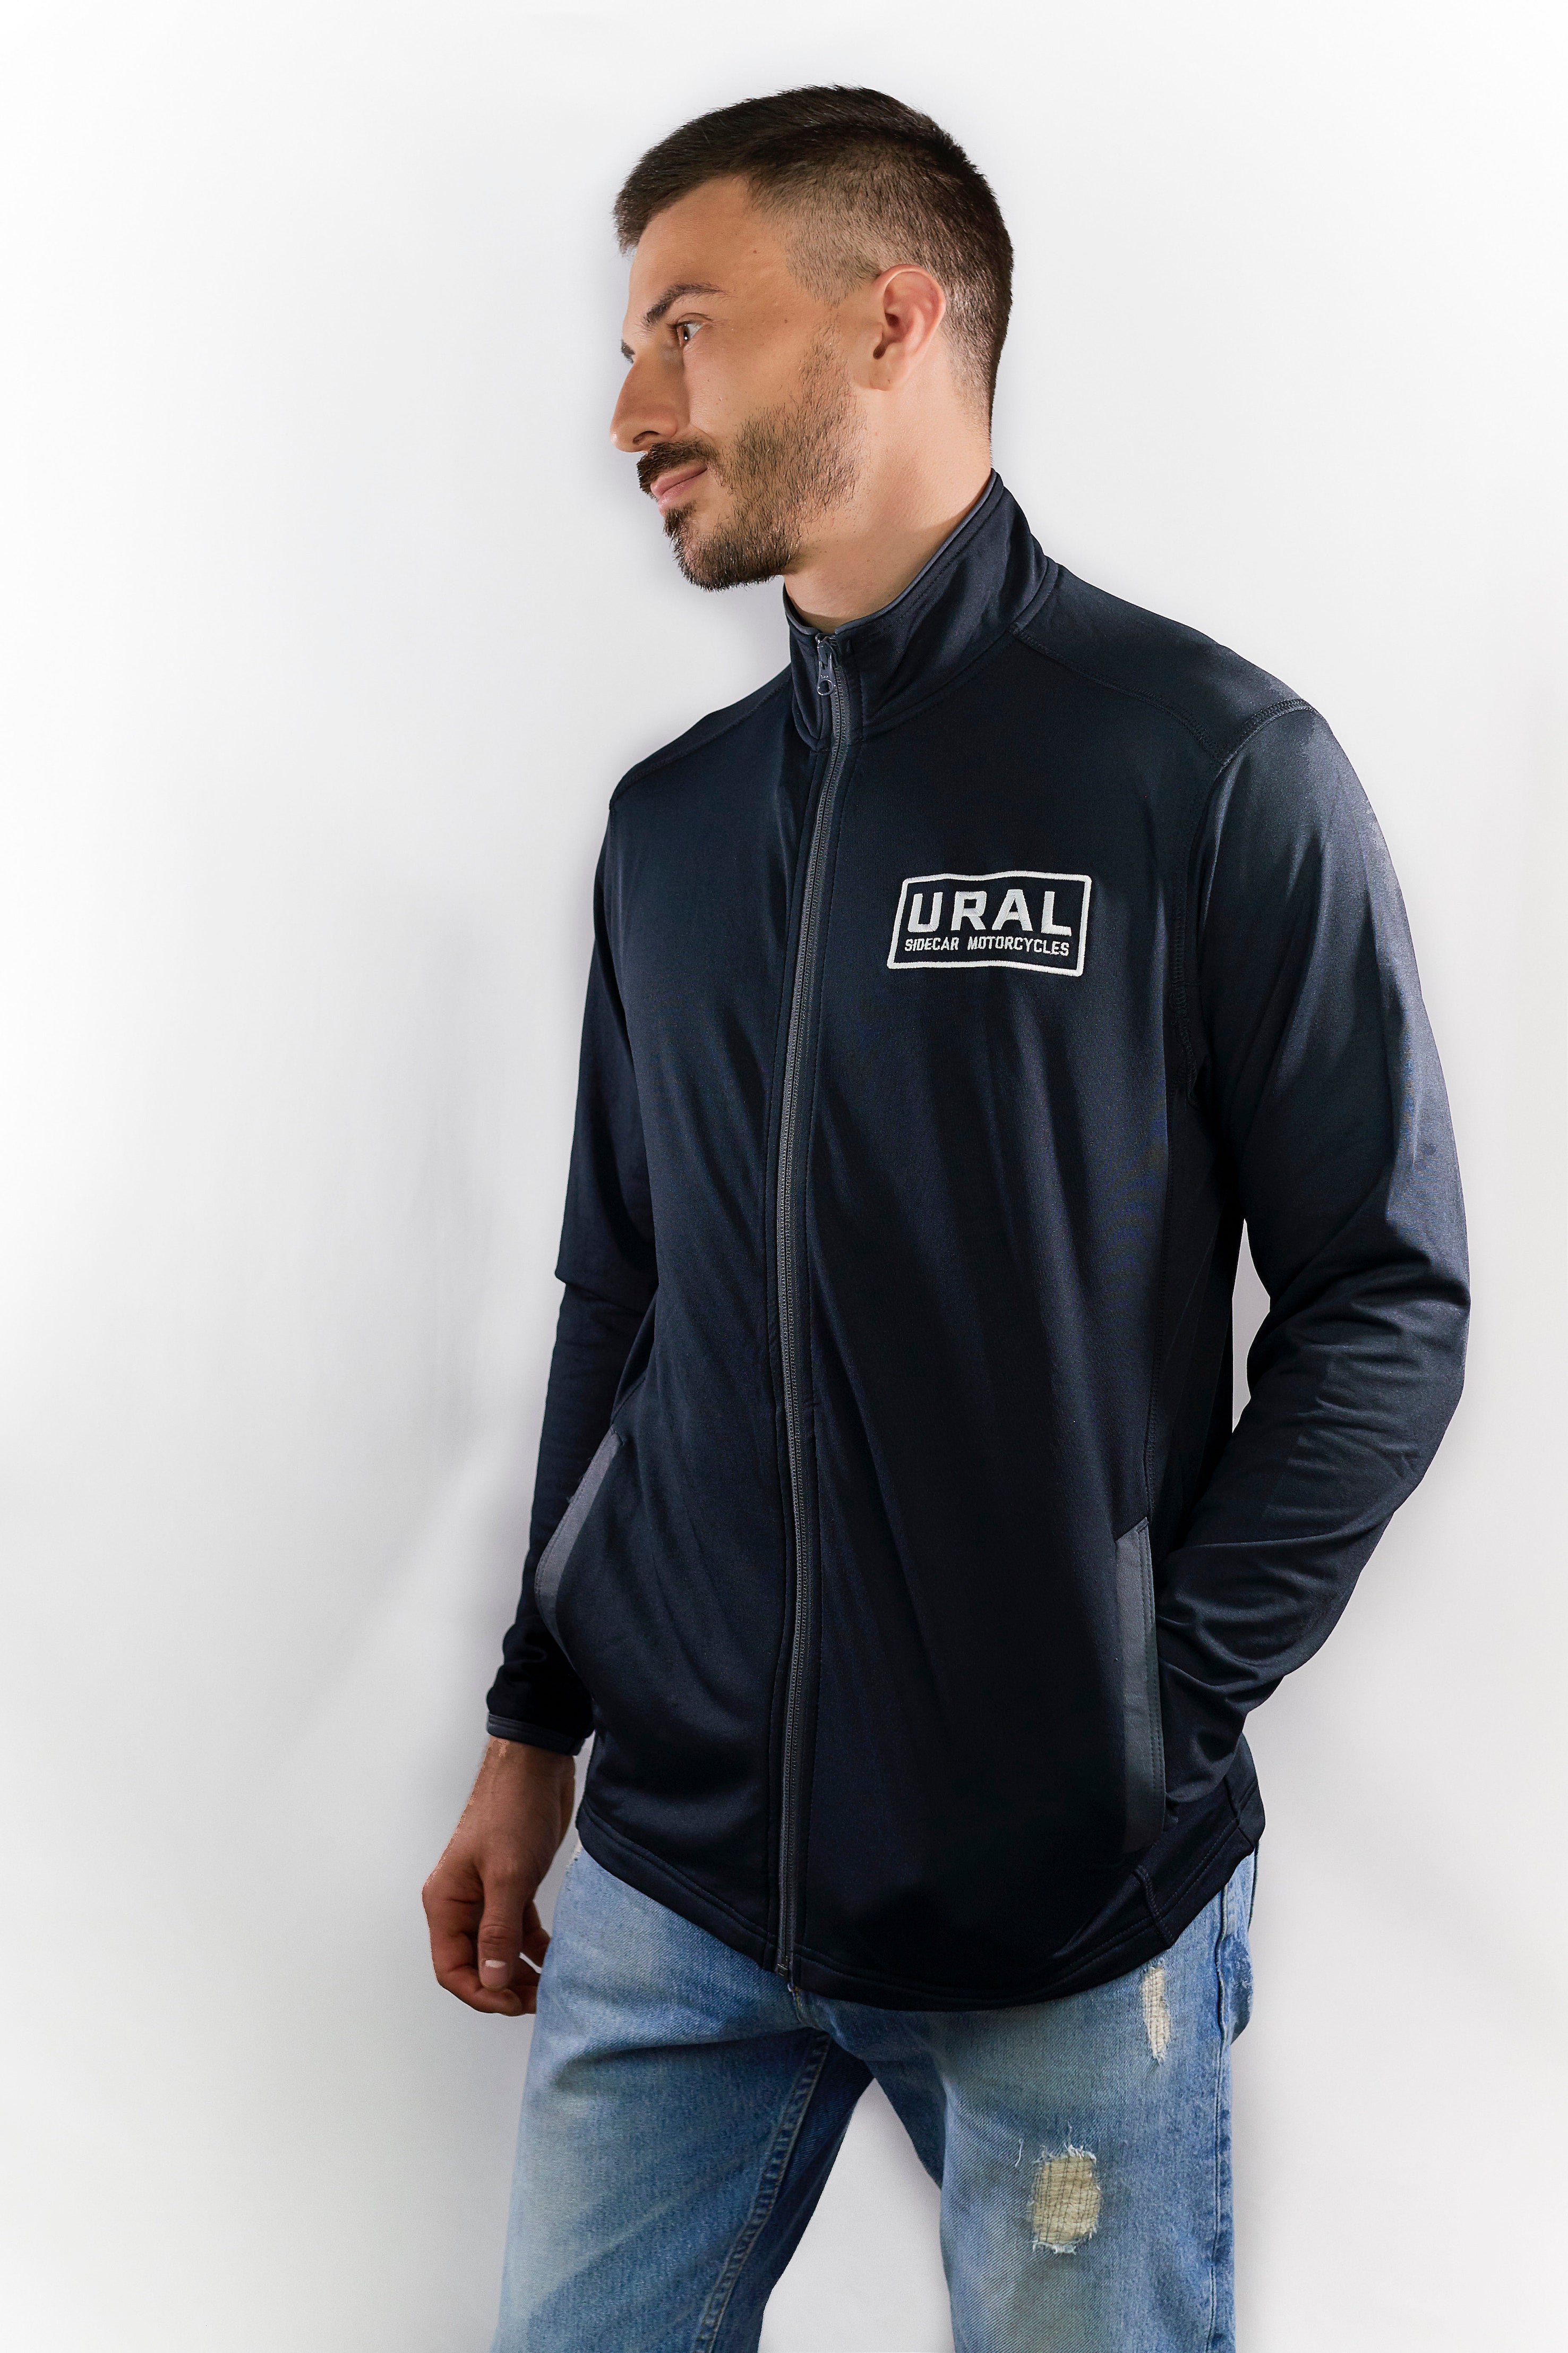 URAL Badge Sport-Wick Jacket